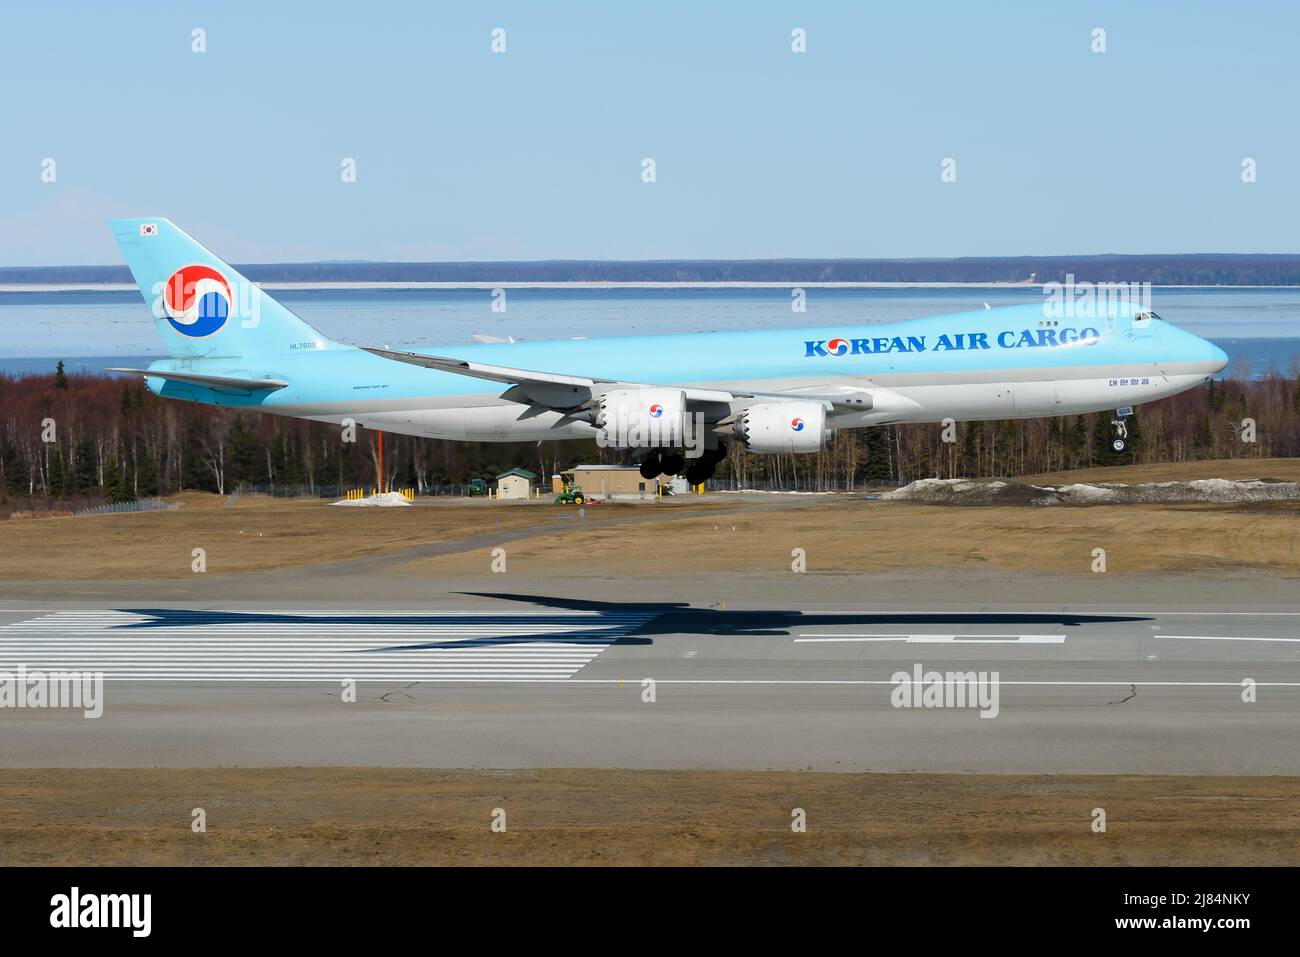 Korean Air Cargo Boeing 747 aircraft landing. Airplane 747-8F flying cargo. Freighter airplane of KoreanAir Cargo arrival. Stock Photo